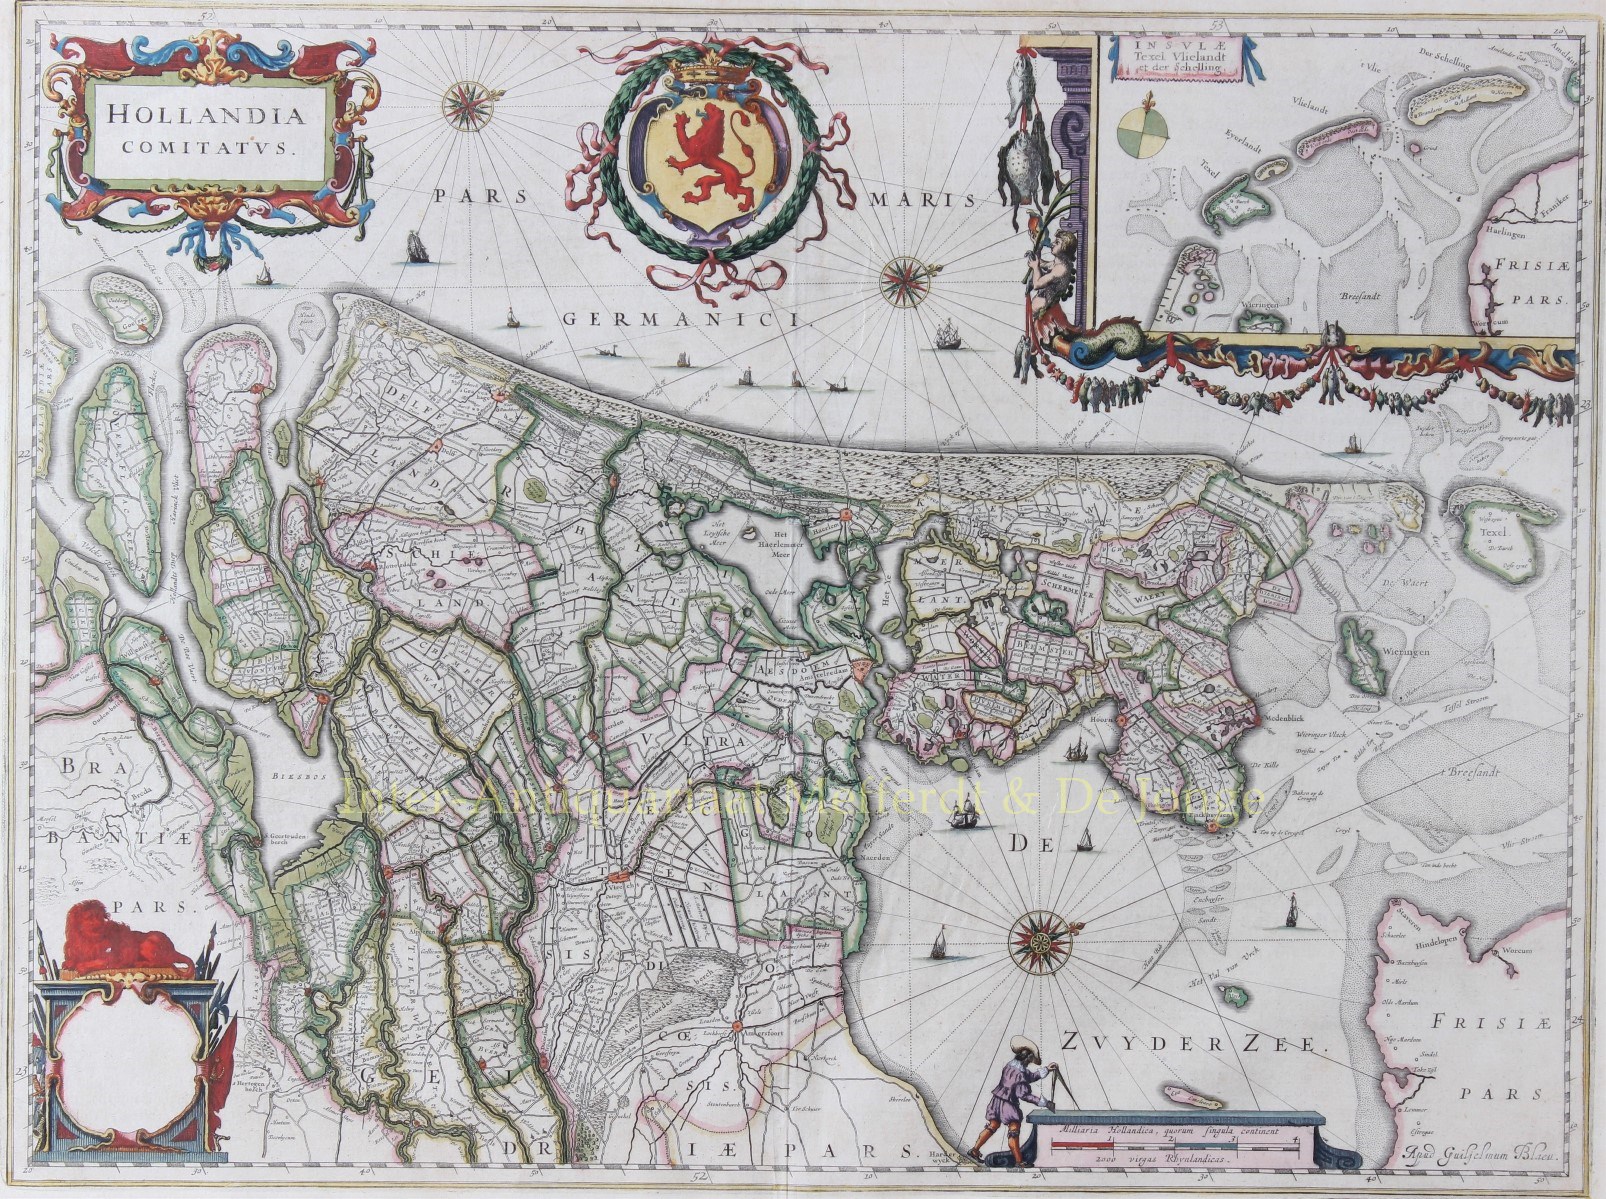 rare old map of Holland engraving century antique original 17th